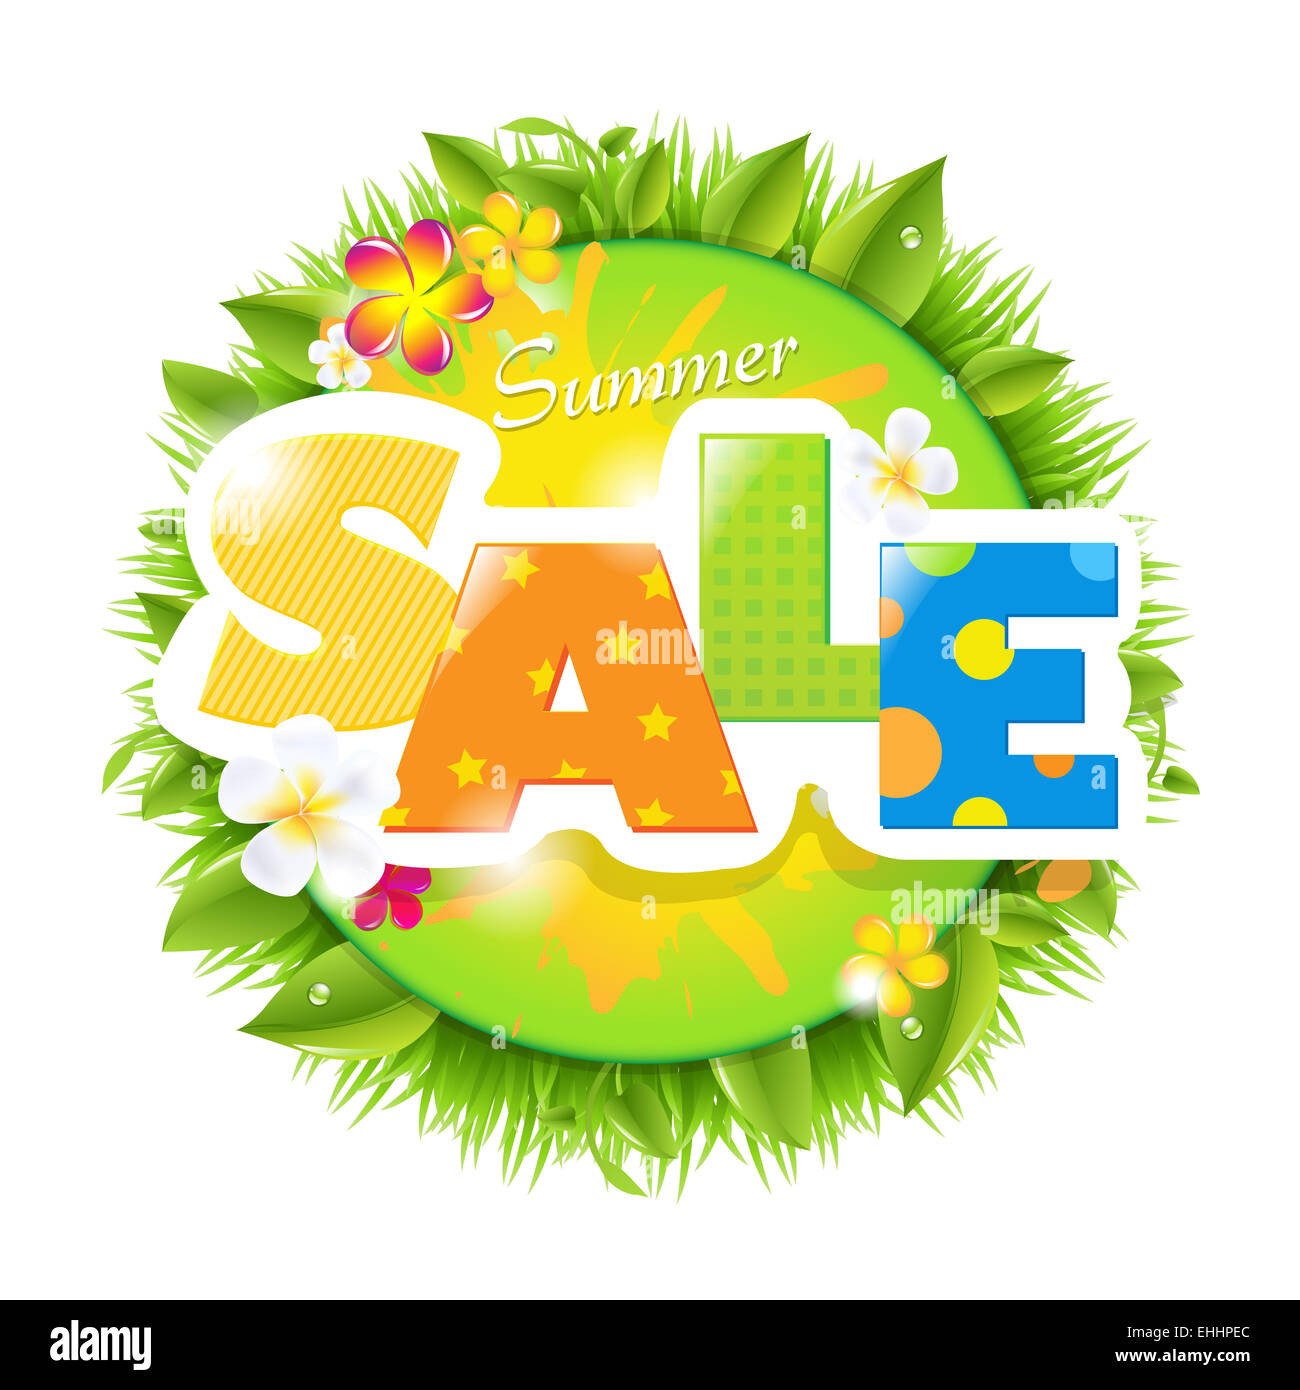 Summer Sale Design Template Stock Photo